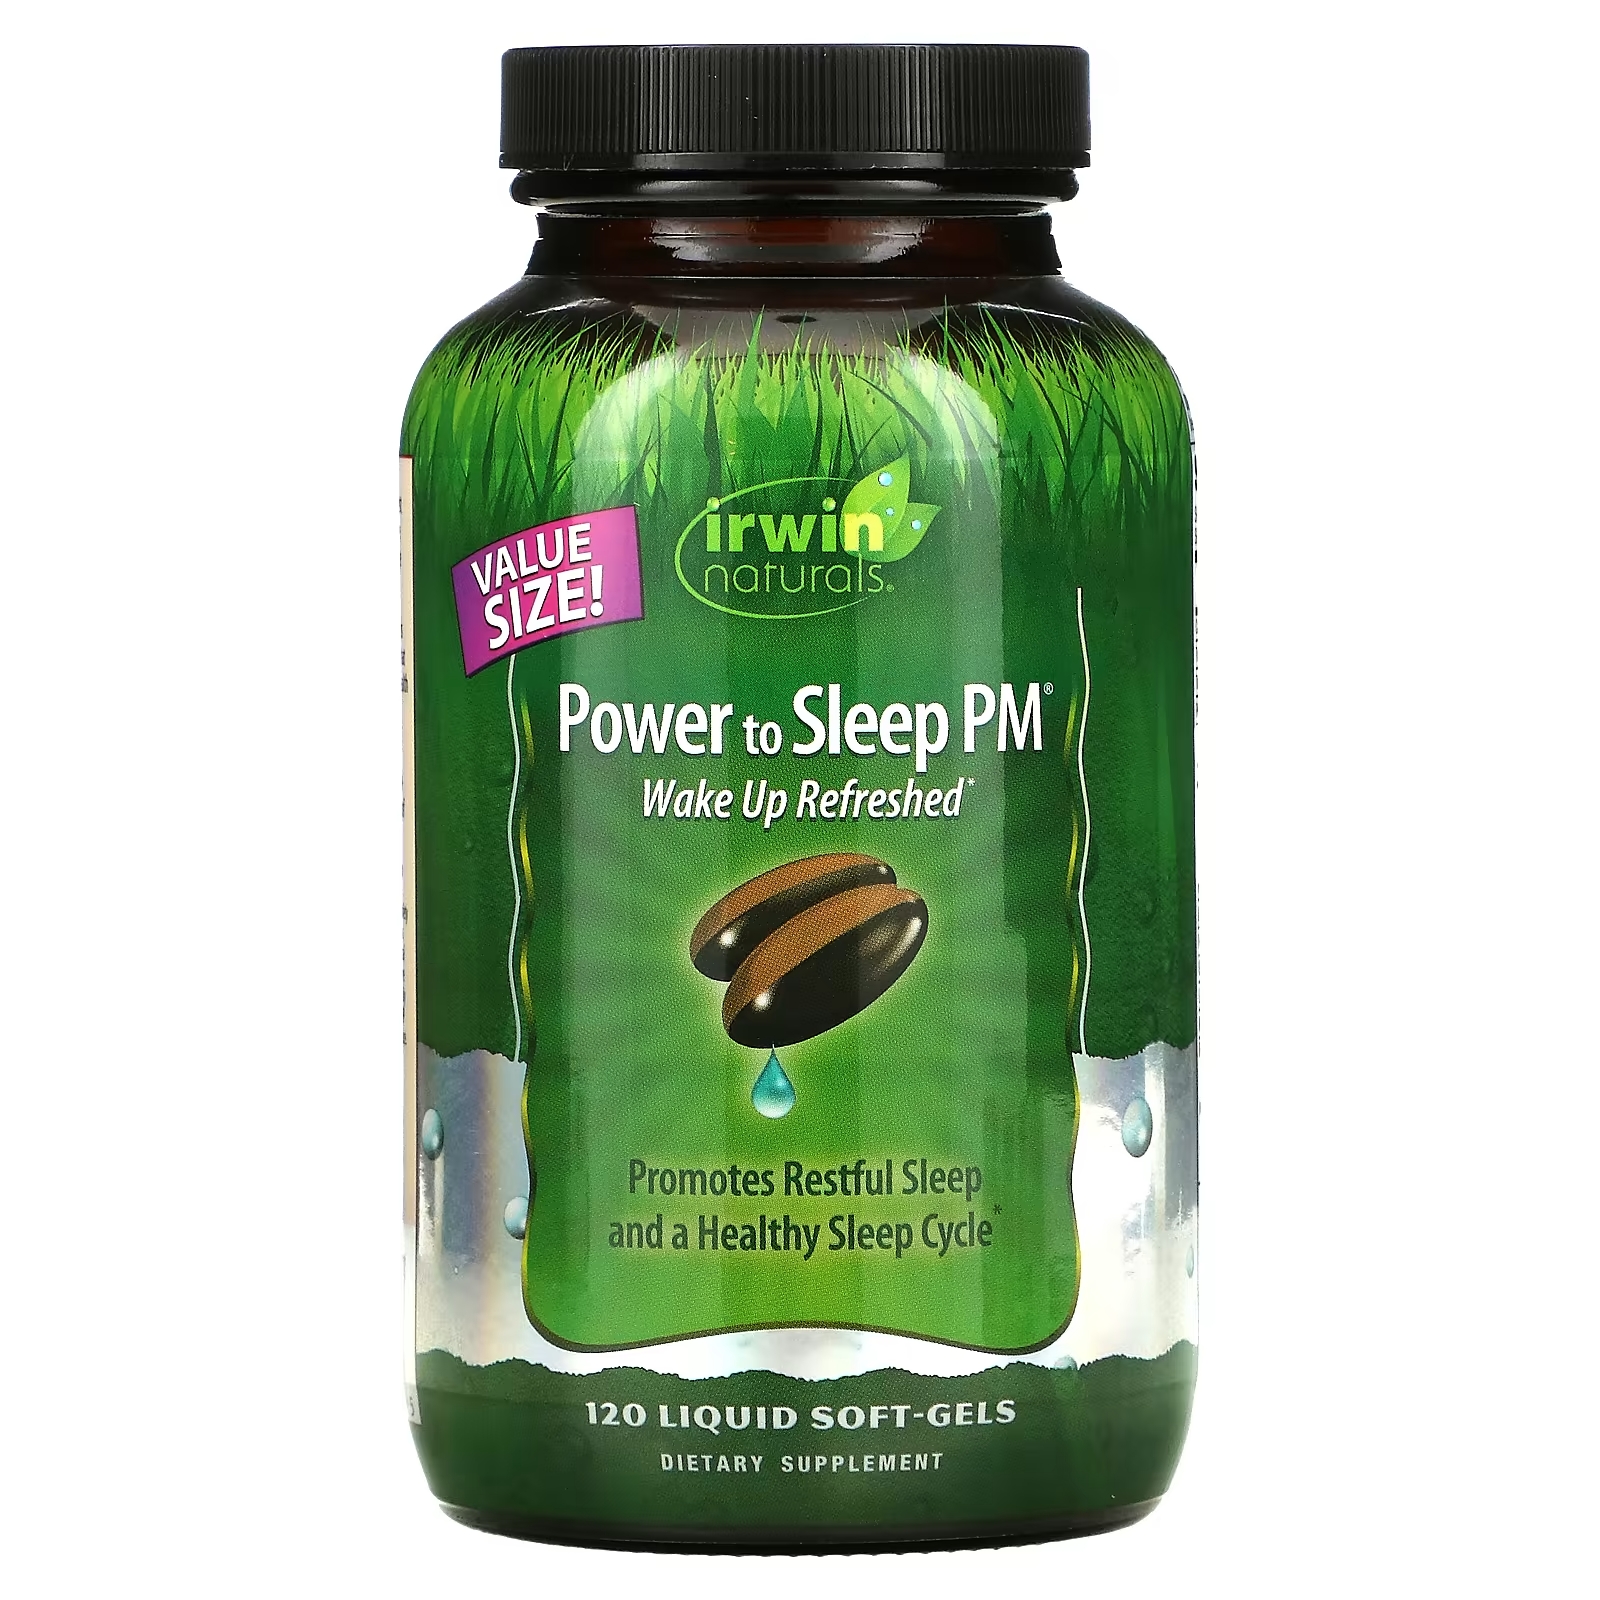 Снотворное Irwin Naturals Power to Sleep, 120 мягких капсул irwin naturals power to sleep pm успокаивающее 60 капсул с жидкостью